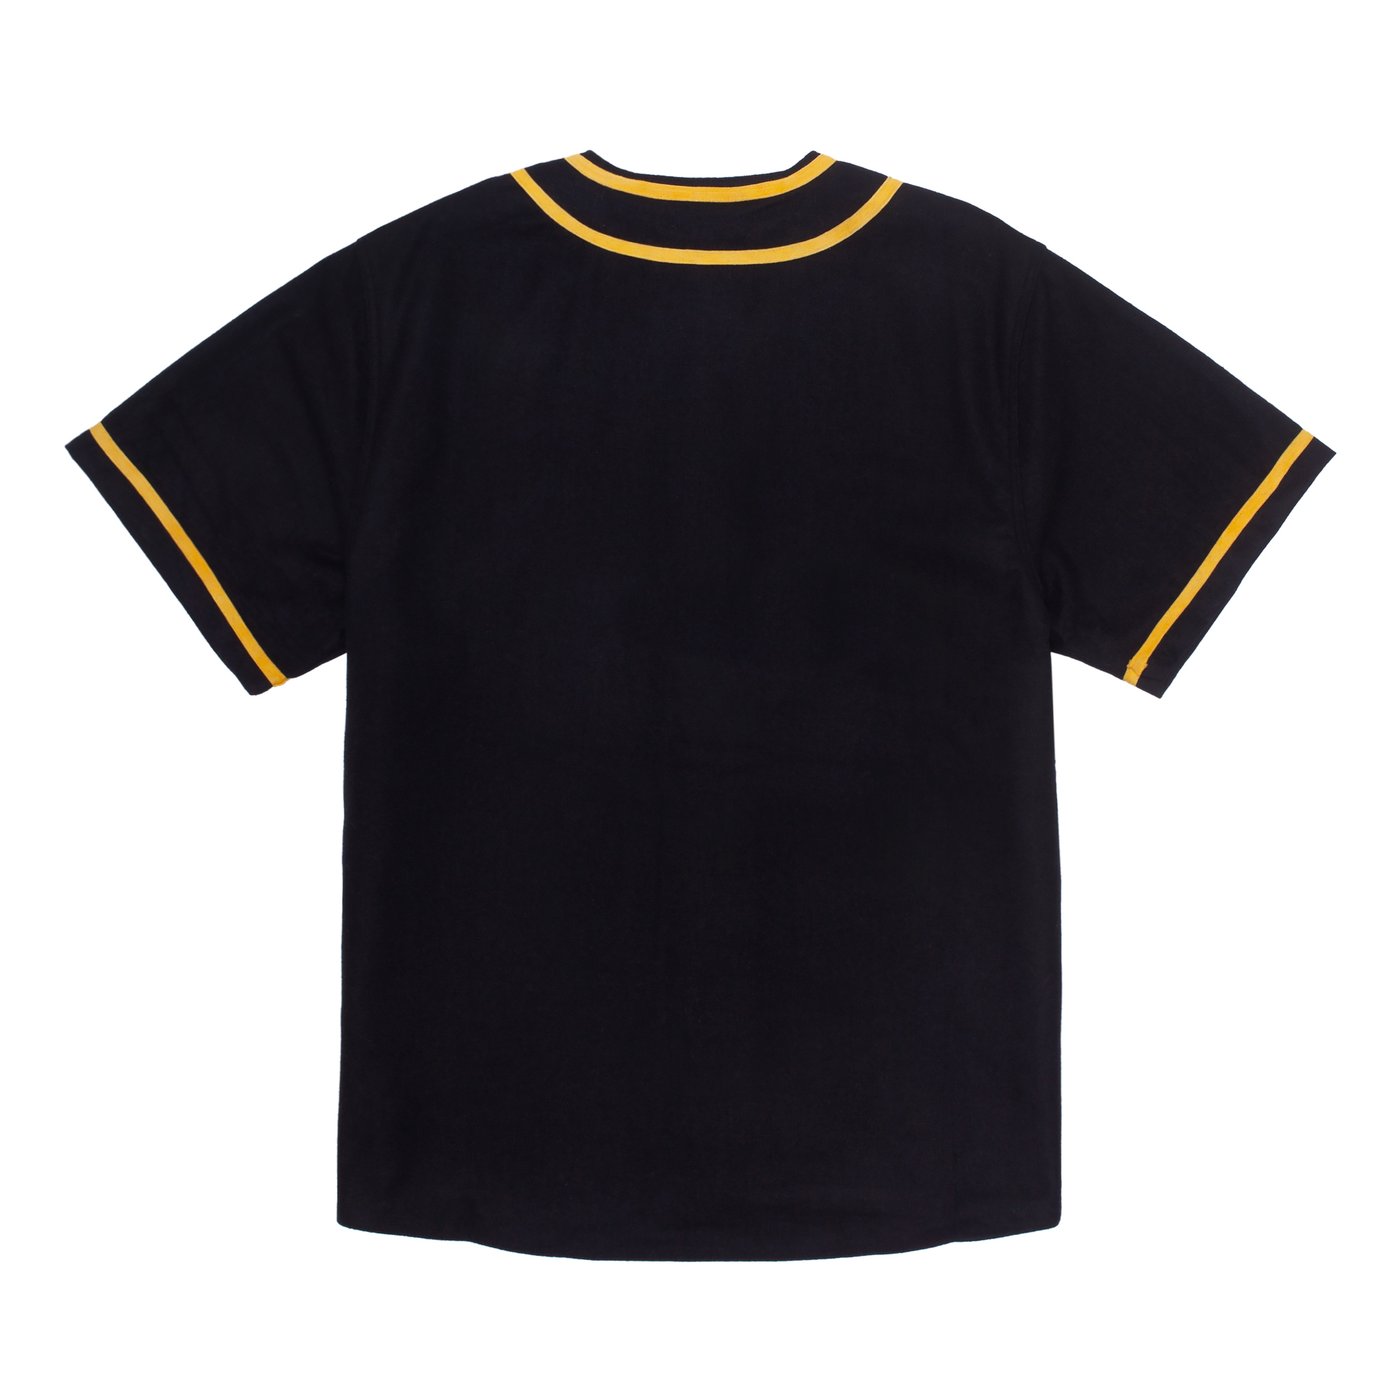 Baseball OverShirt Black Yellow